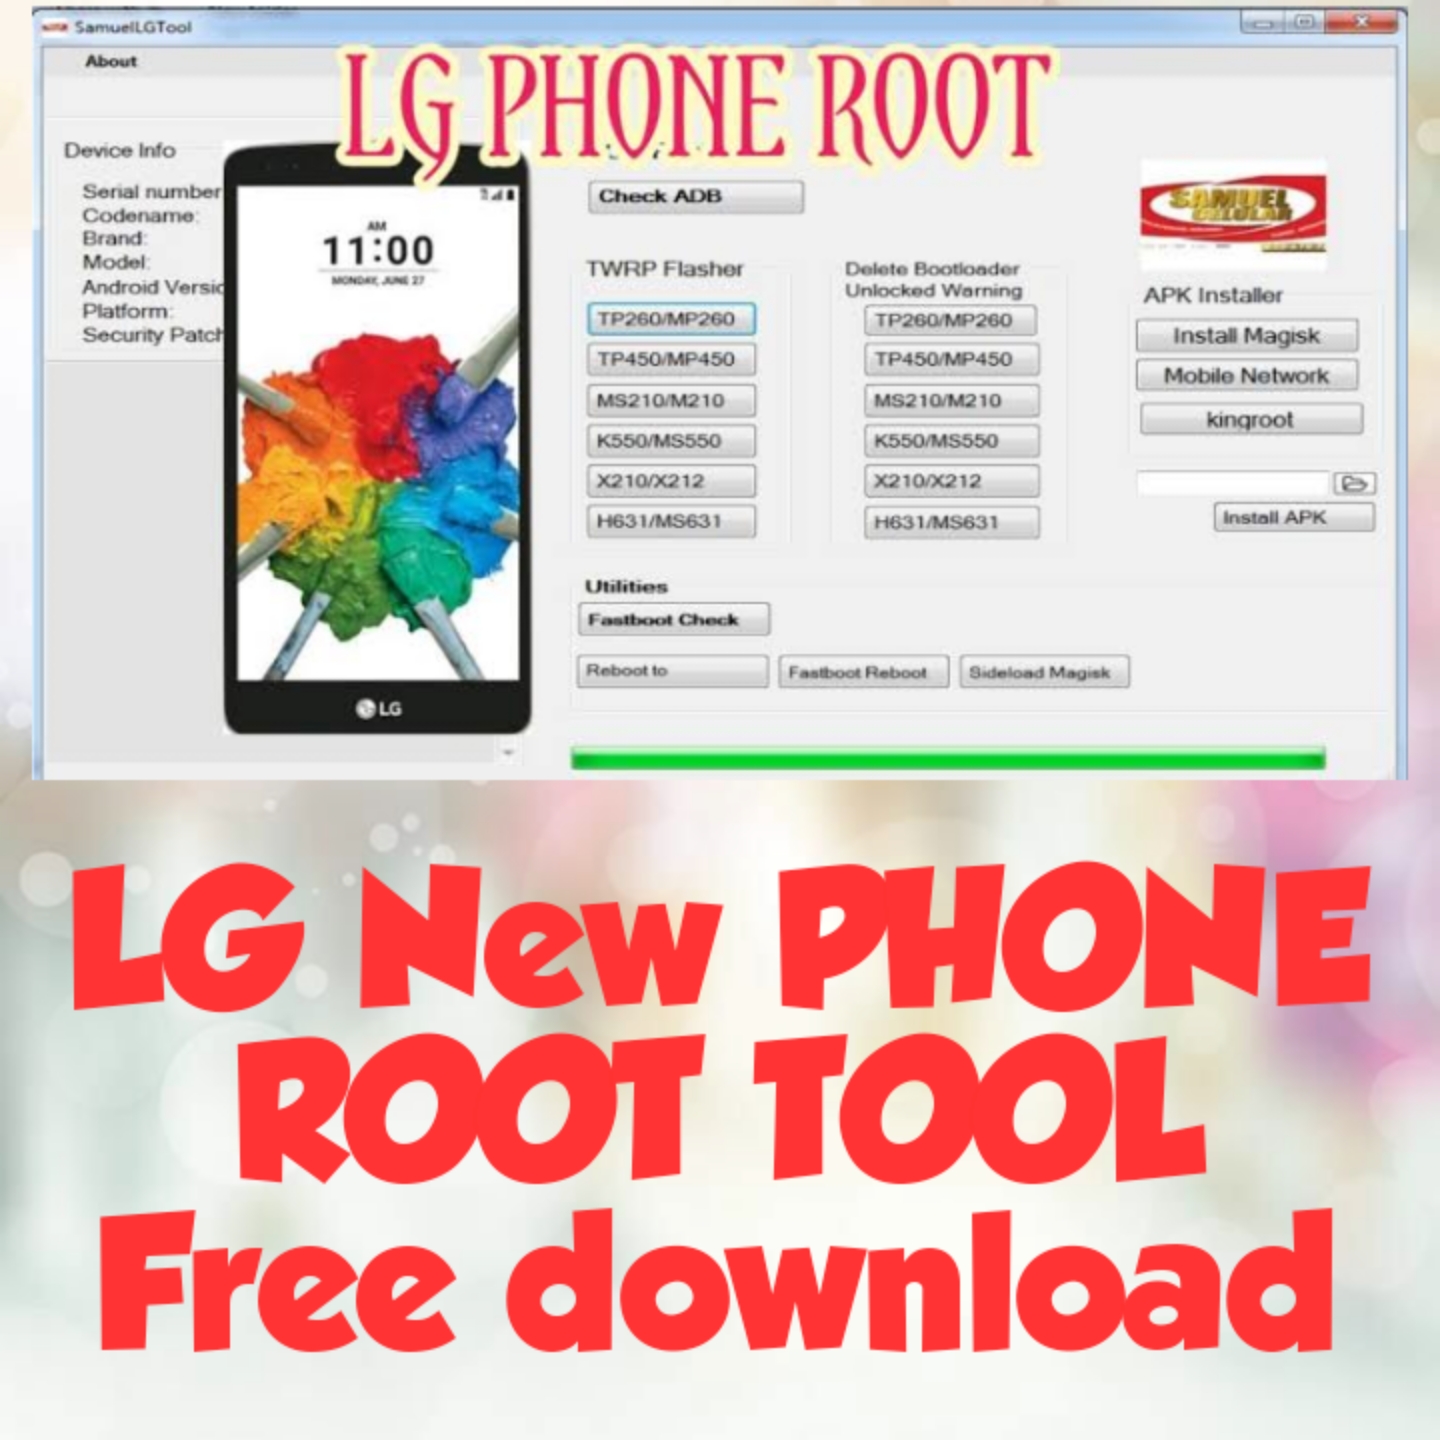 LG New PHONE ROOT TOOL Free download